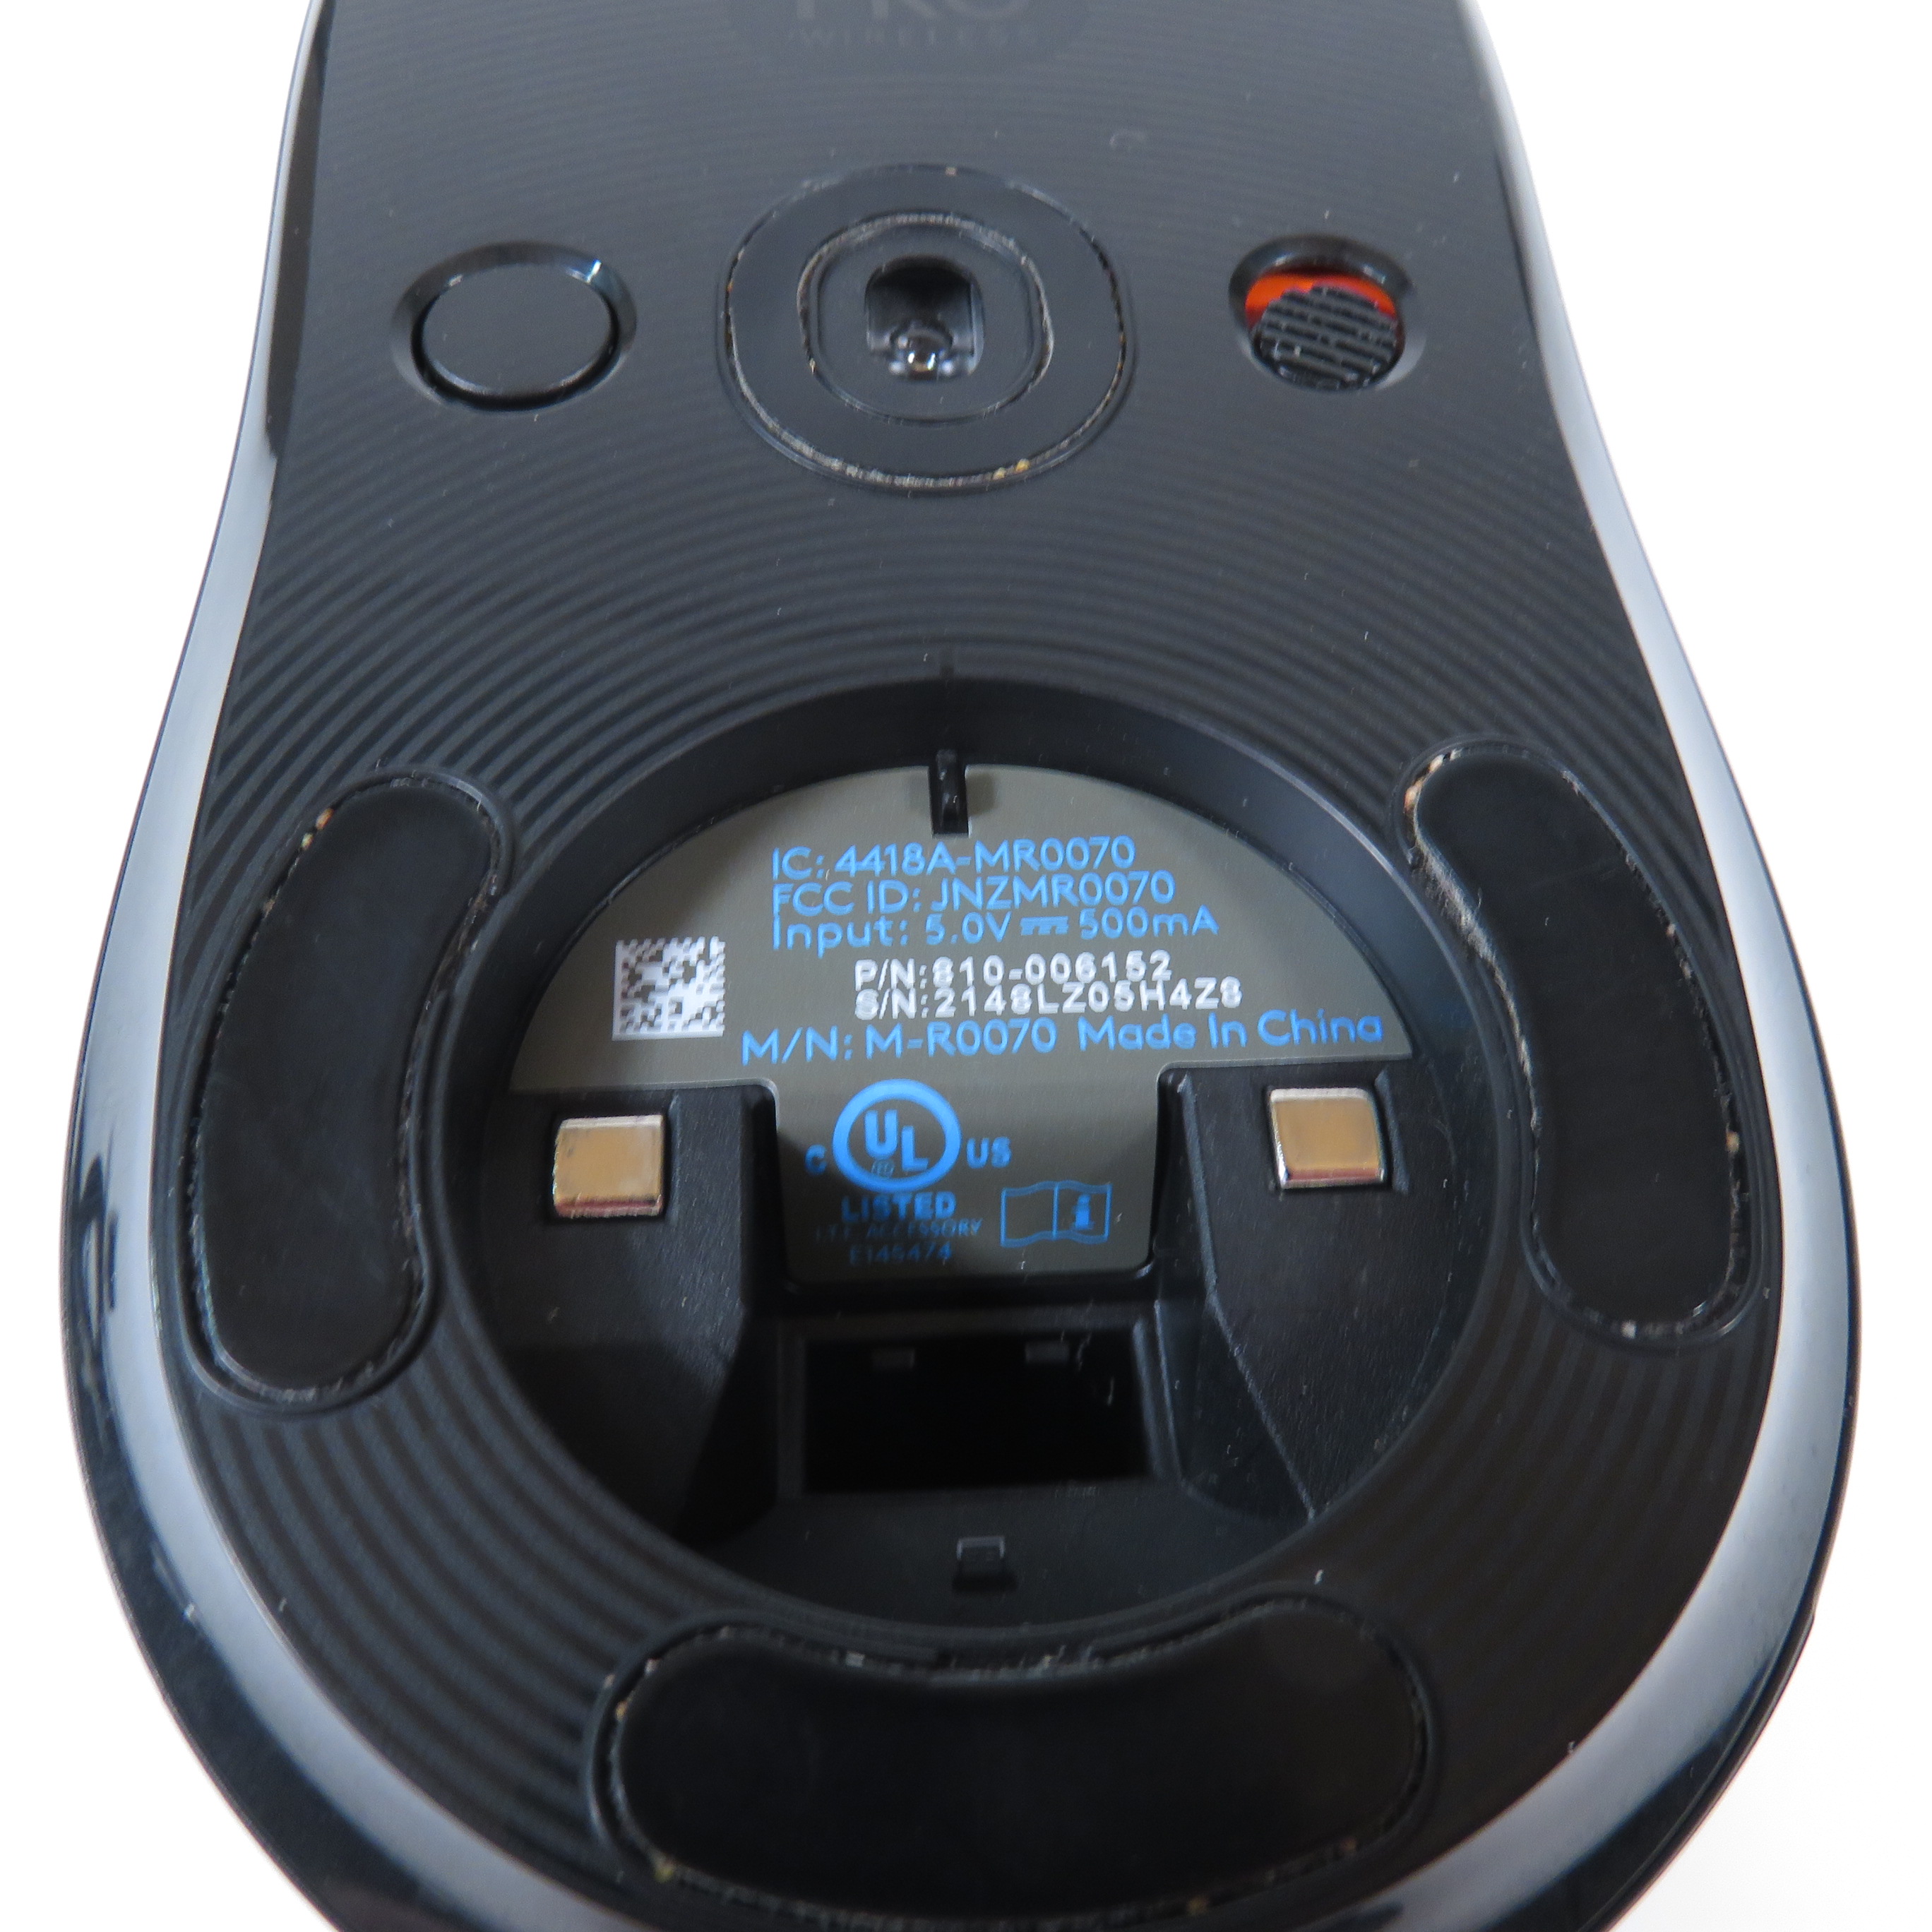 Logitech - G PRO Lightweight Wireless Optical Ambidextrous Gaming Mouse  with RGB Lighting - Black 